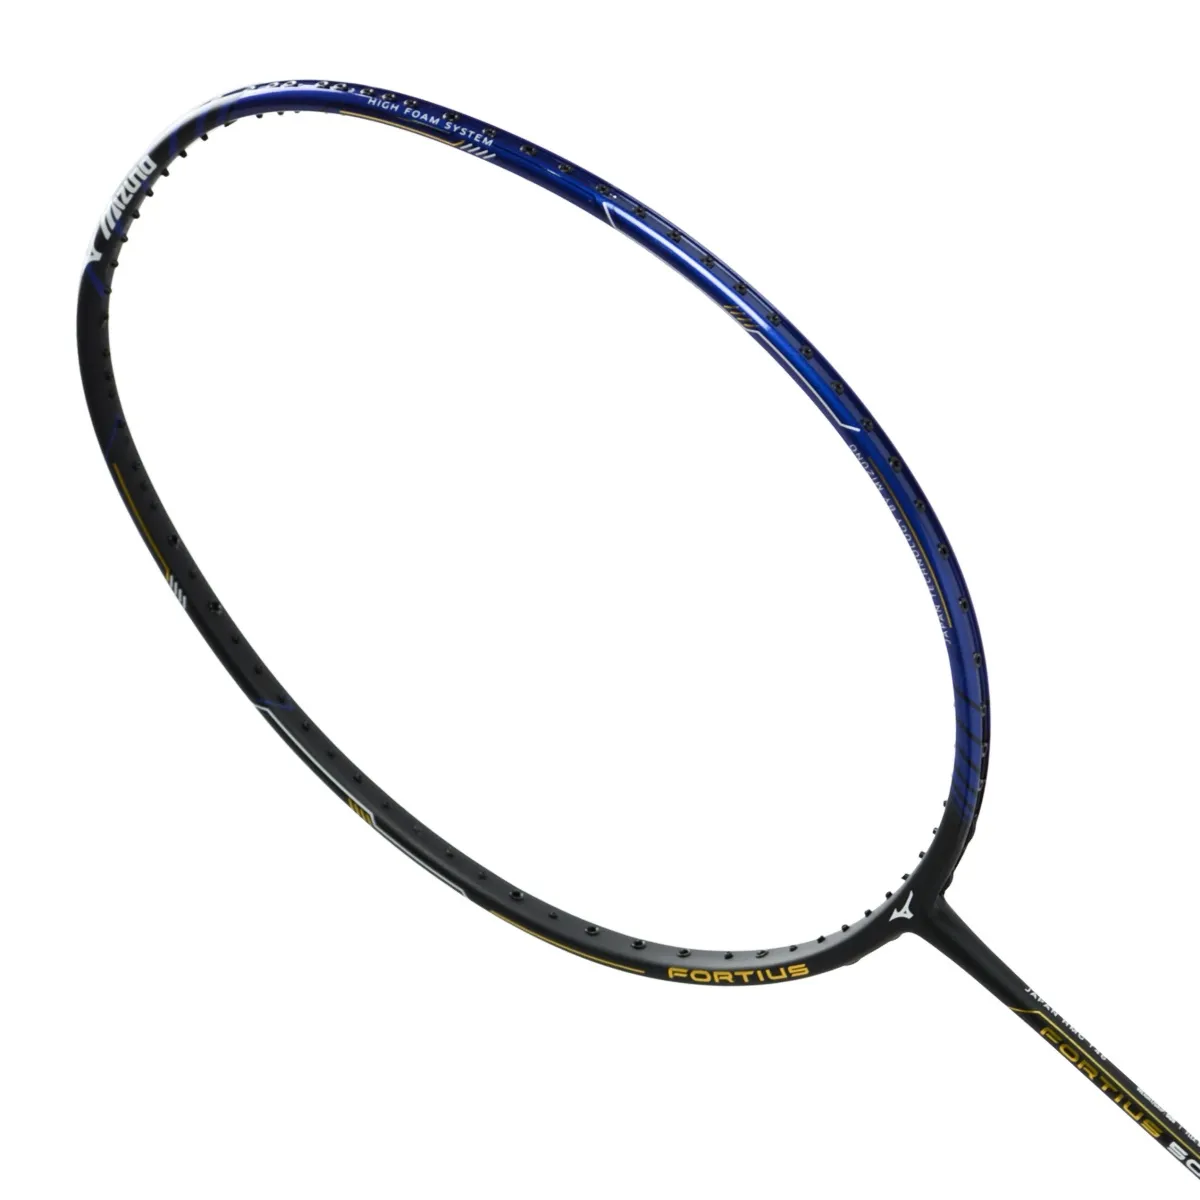 Buy Mizuno Fortius 50 Swift Badminton Racket Lowest price Sportsuncle